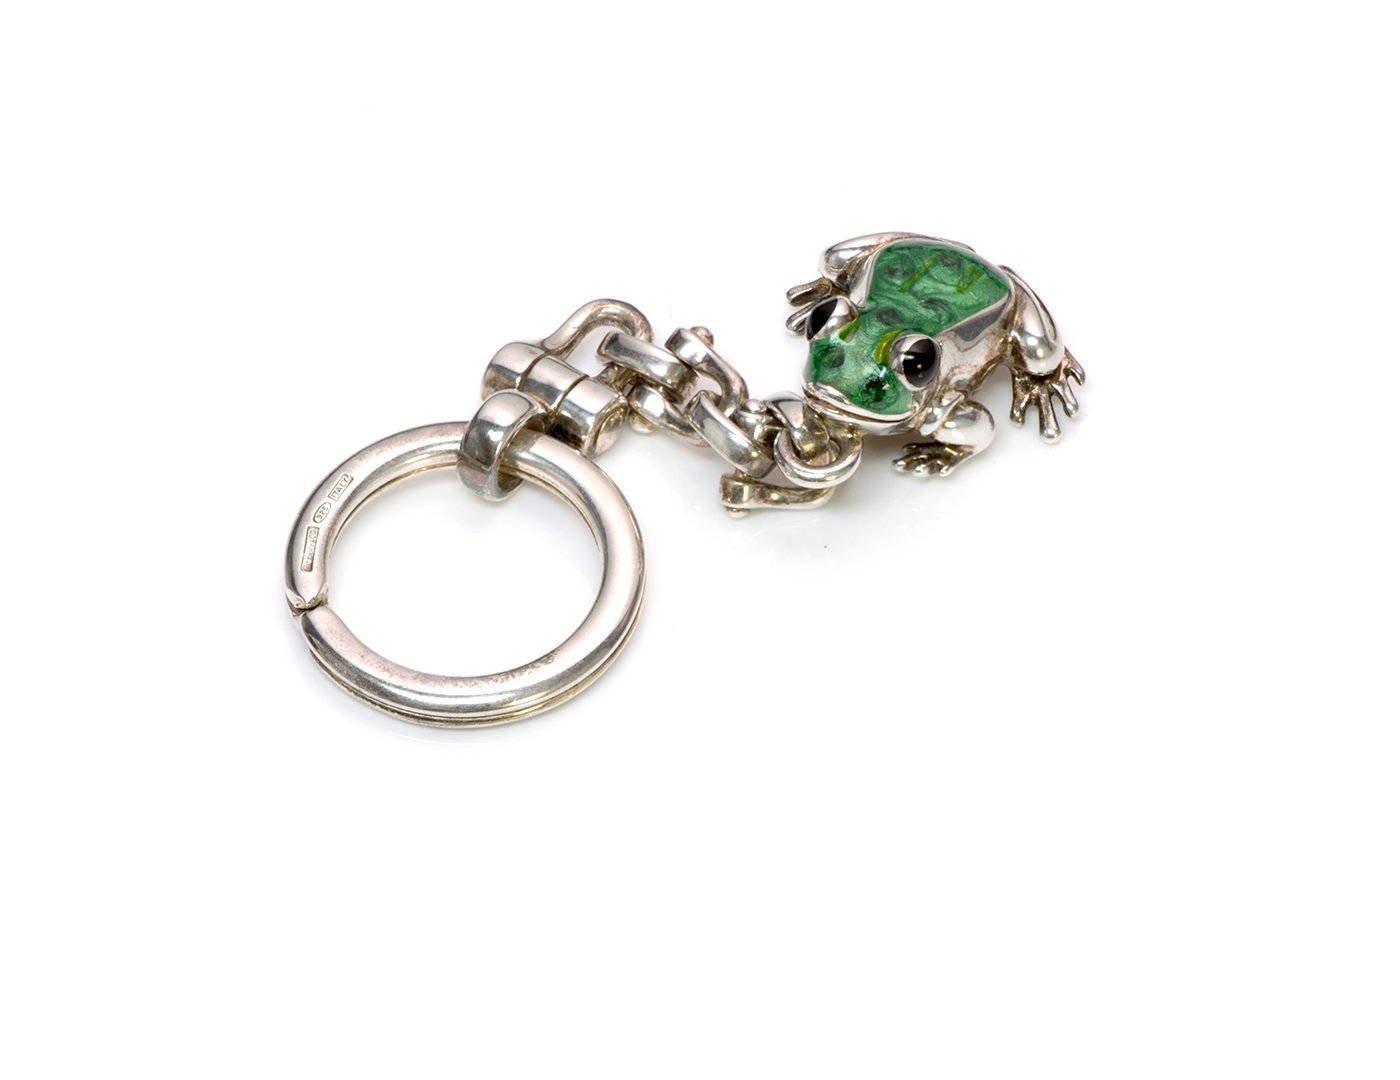 Tiffany & Co. Sterling Enamel Frog Key Chain